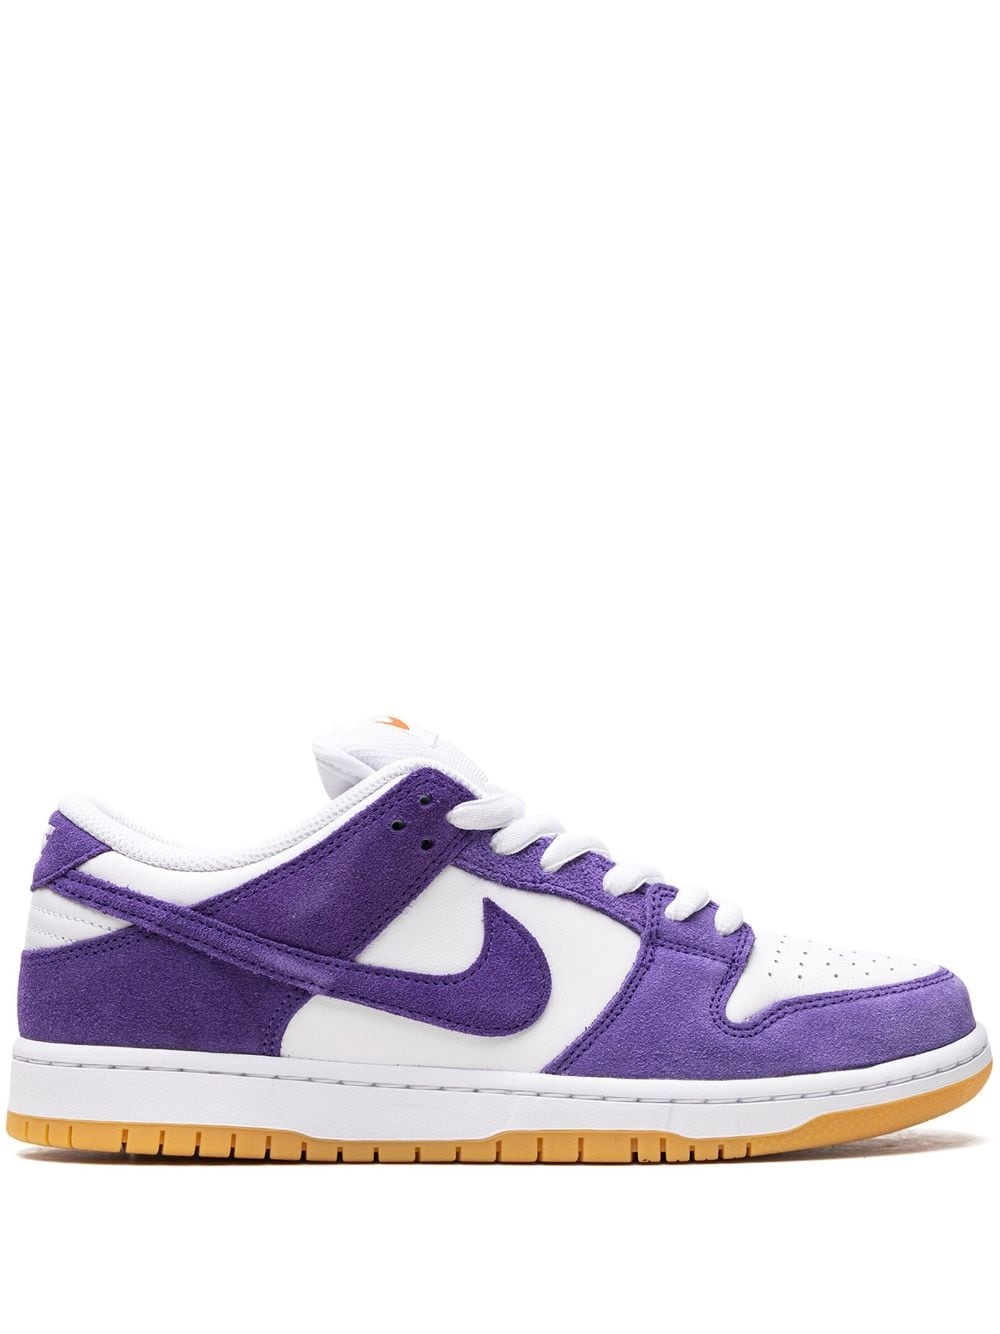 SB Dunk Low Pro ISO "Court Purple" sneakers - 1